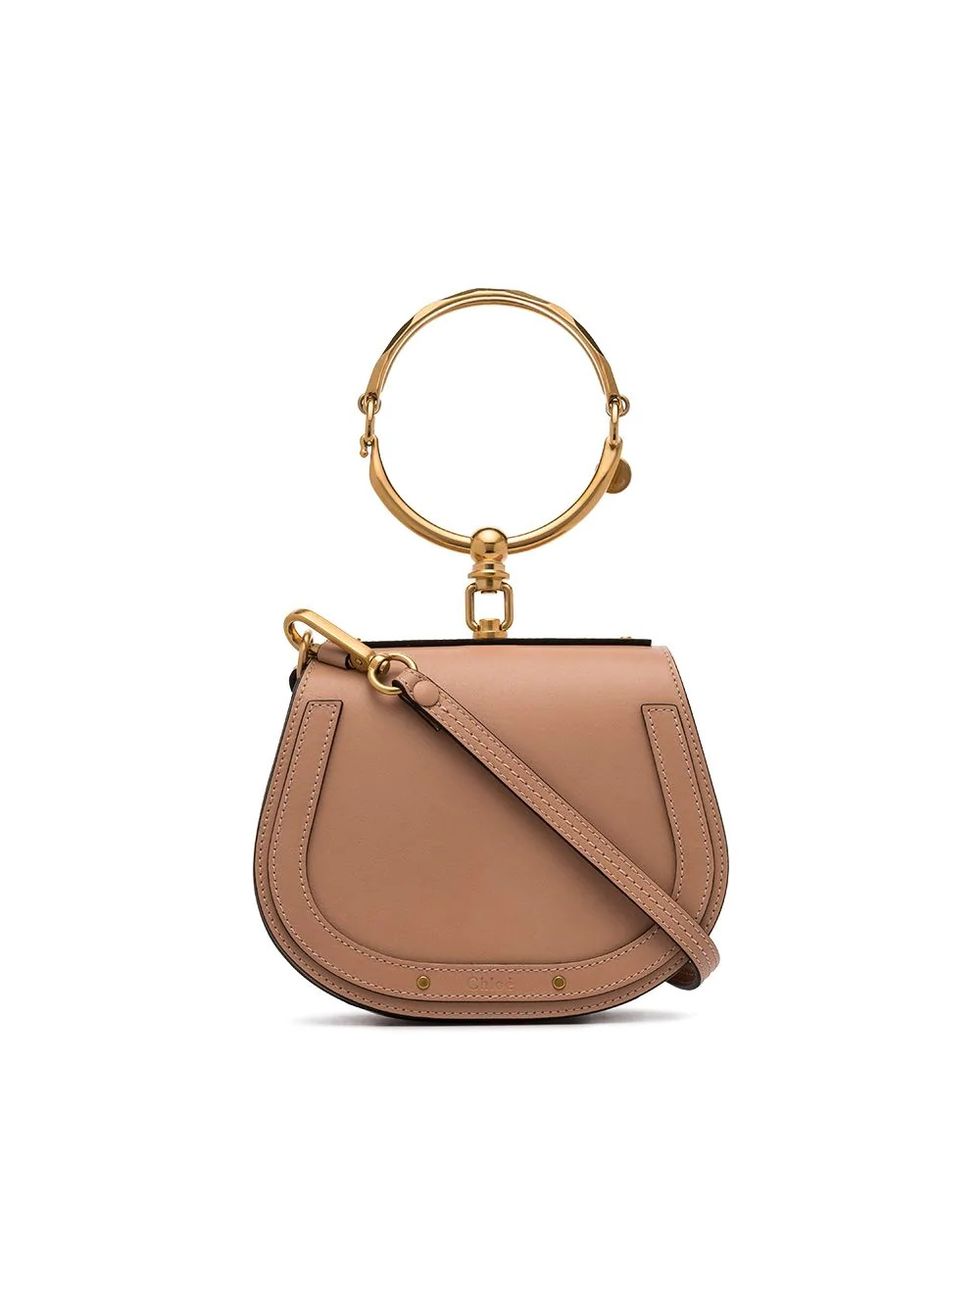 Bag, Handbag, Tan, Fashion accessory, Brown, Beige, Leather, Coin purse, Keychain, Shoulder bag, 